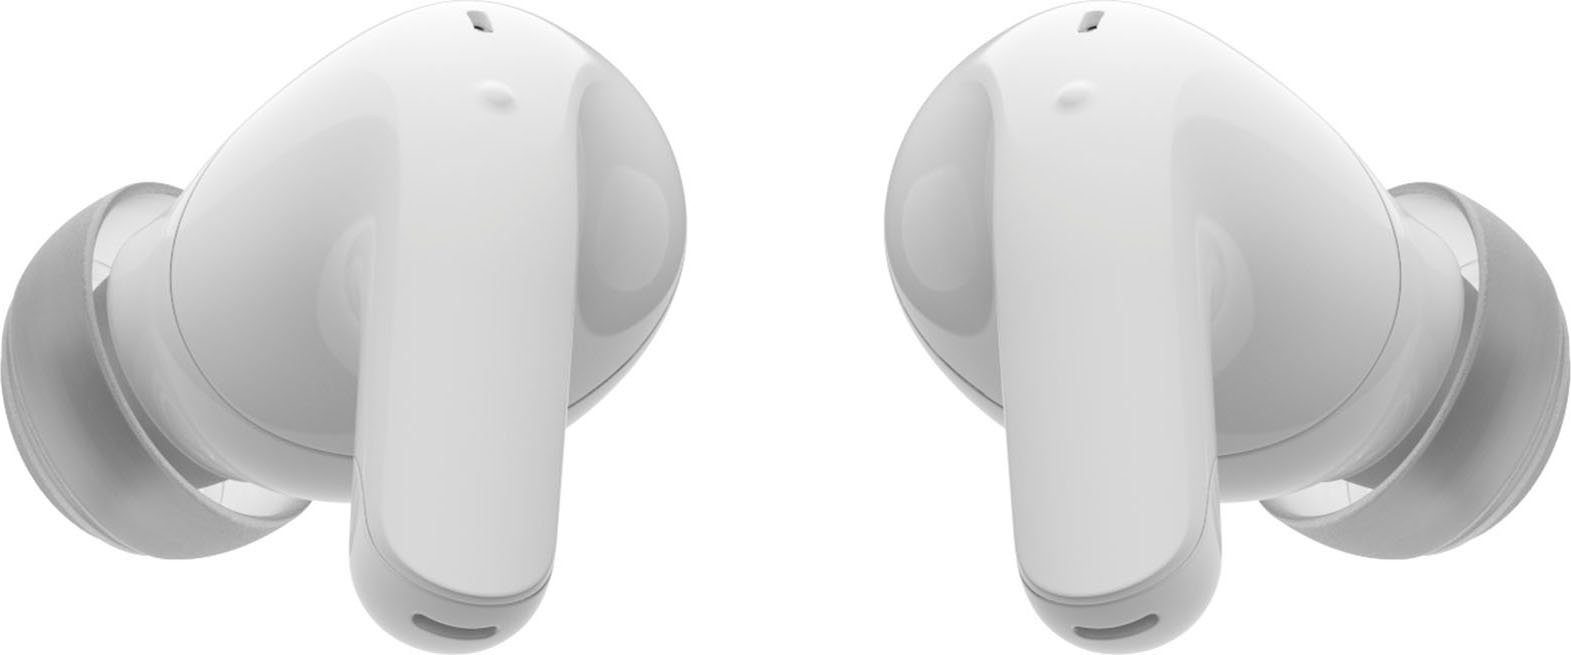 LG TONE Free DT60Q In-Ear-Kopfhörer Weiß wireless